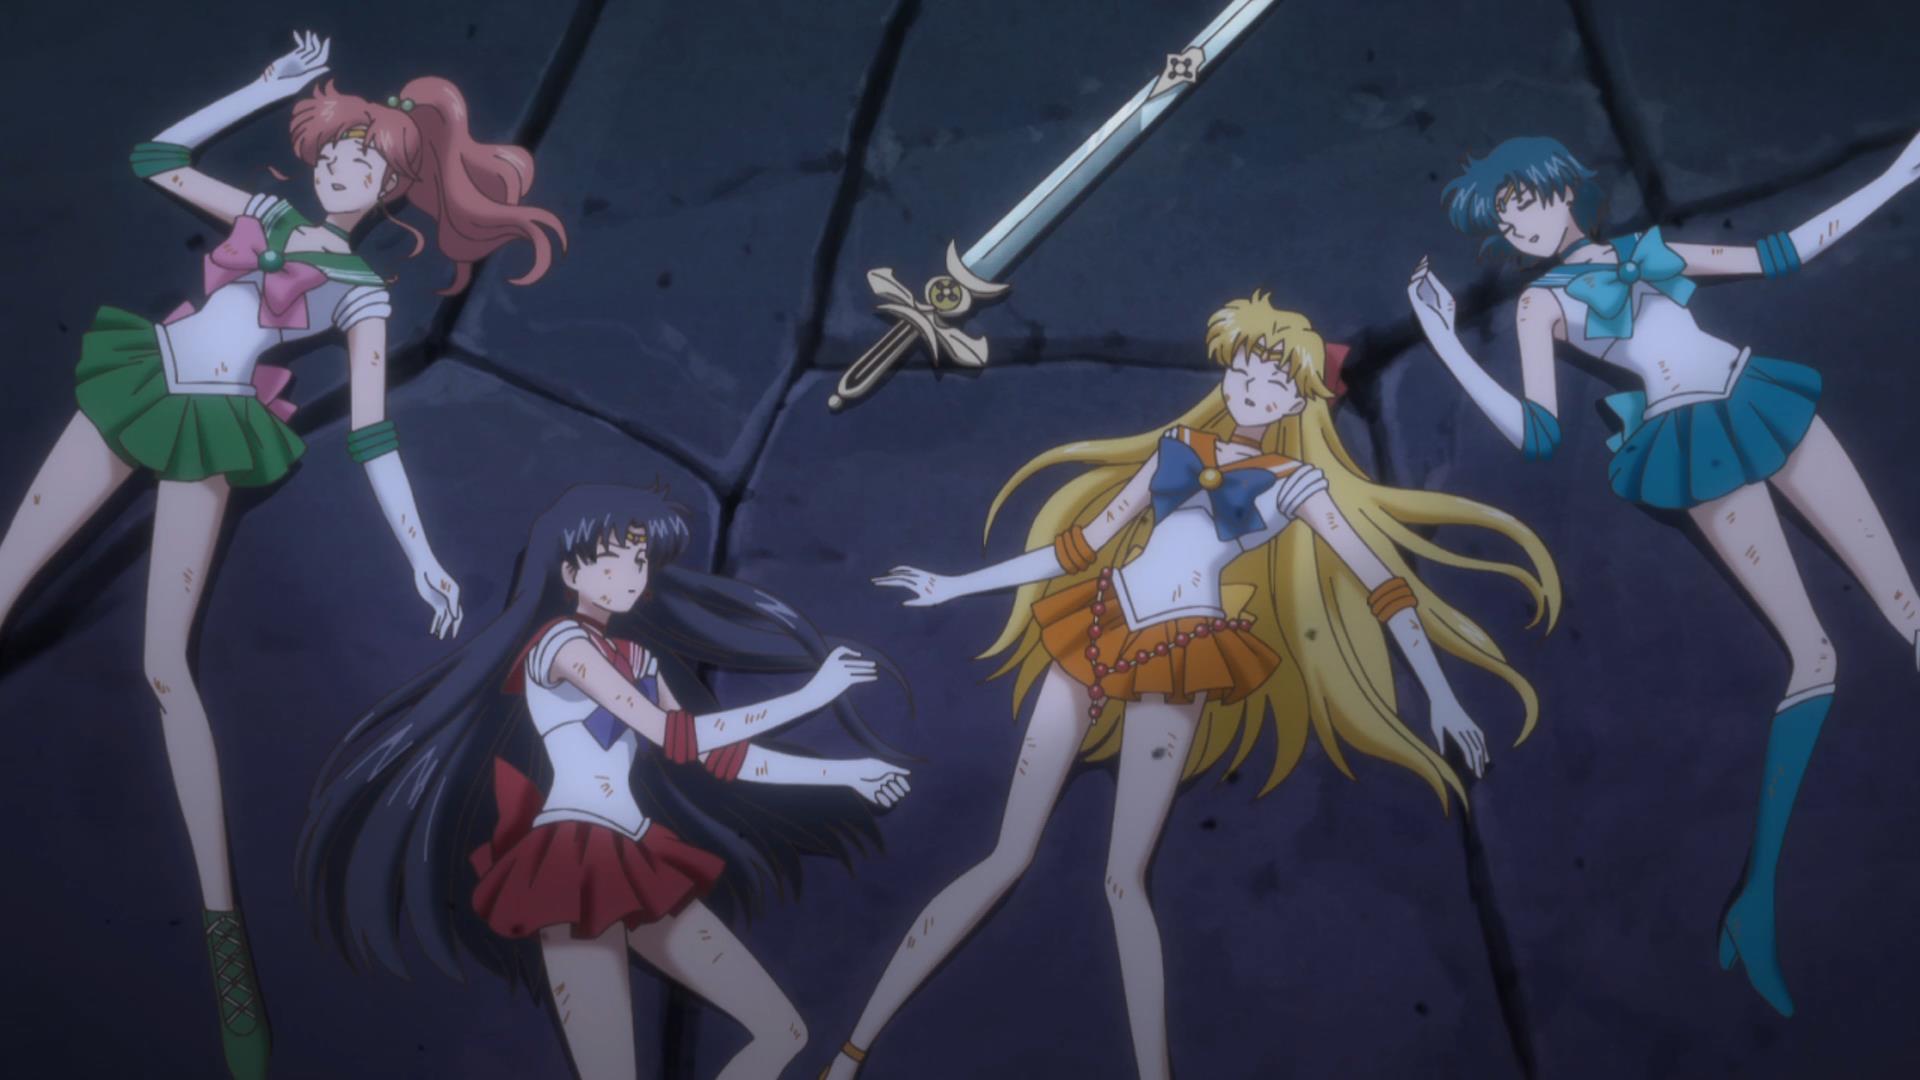 x04 Sailor Senshi defeated again